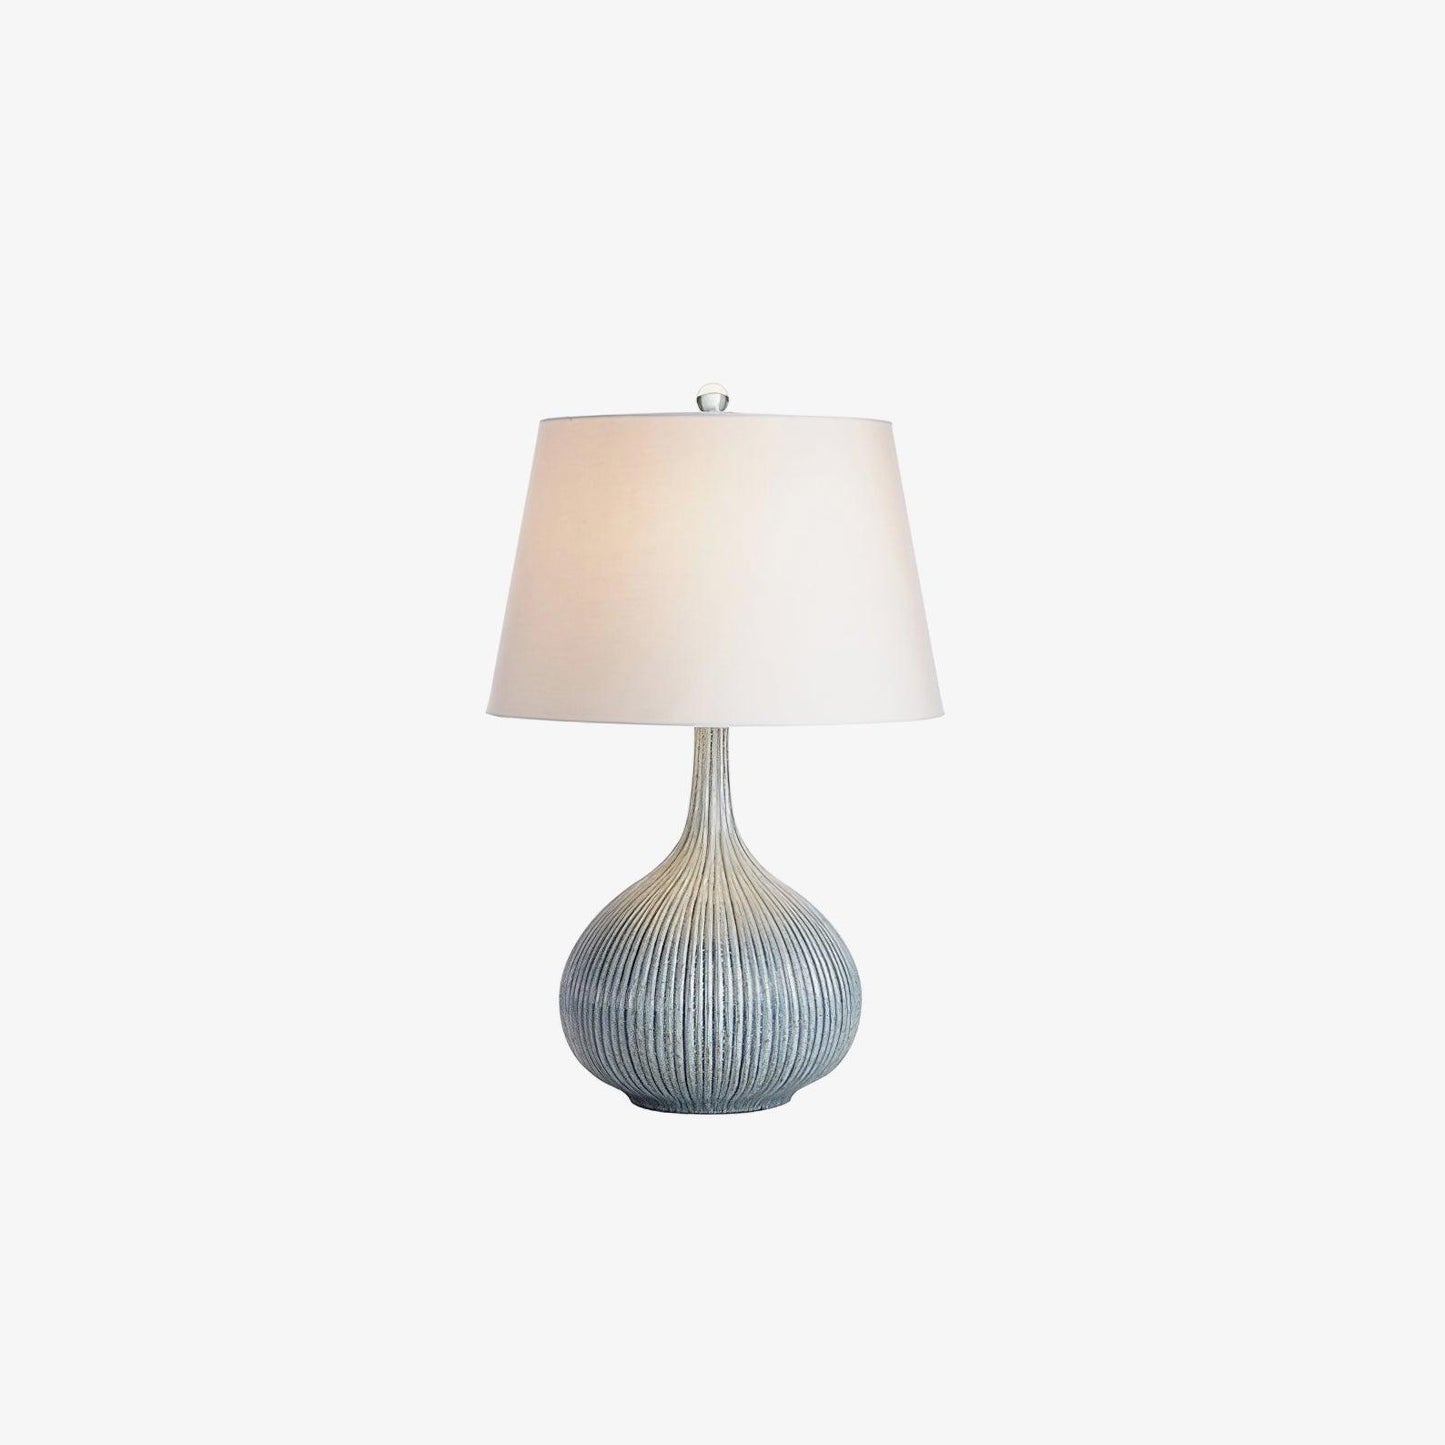 Kole Ceramic Table Lamp